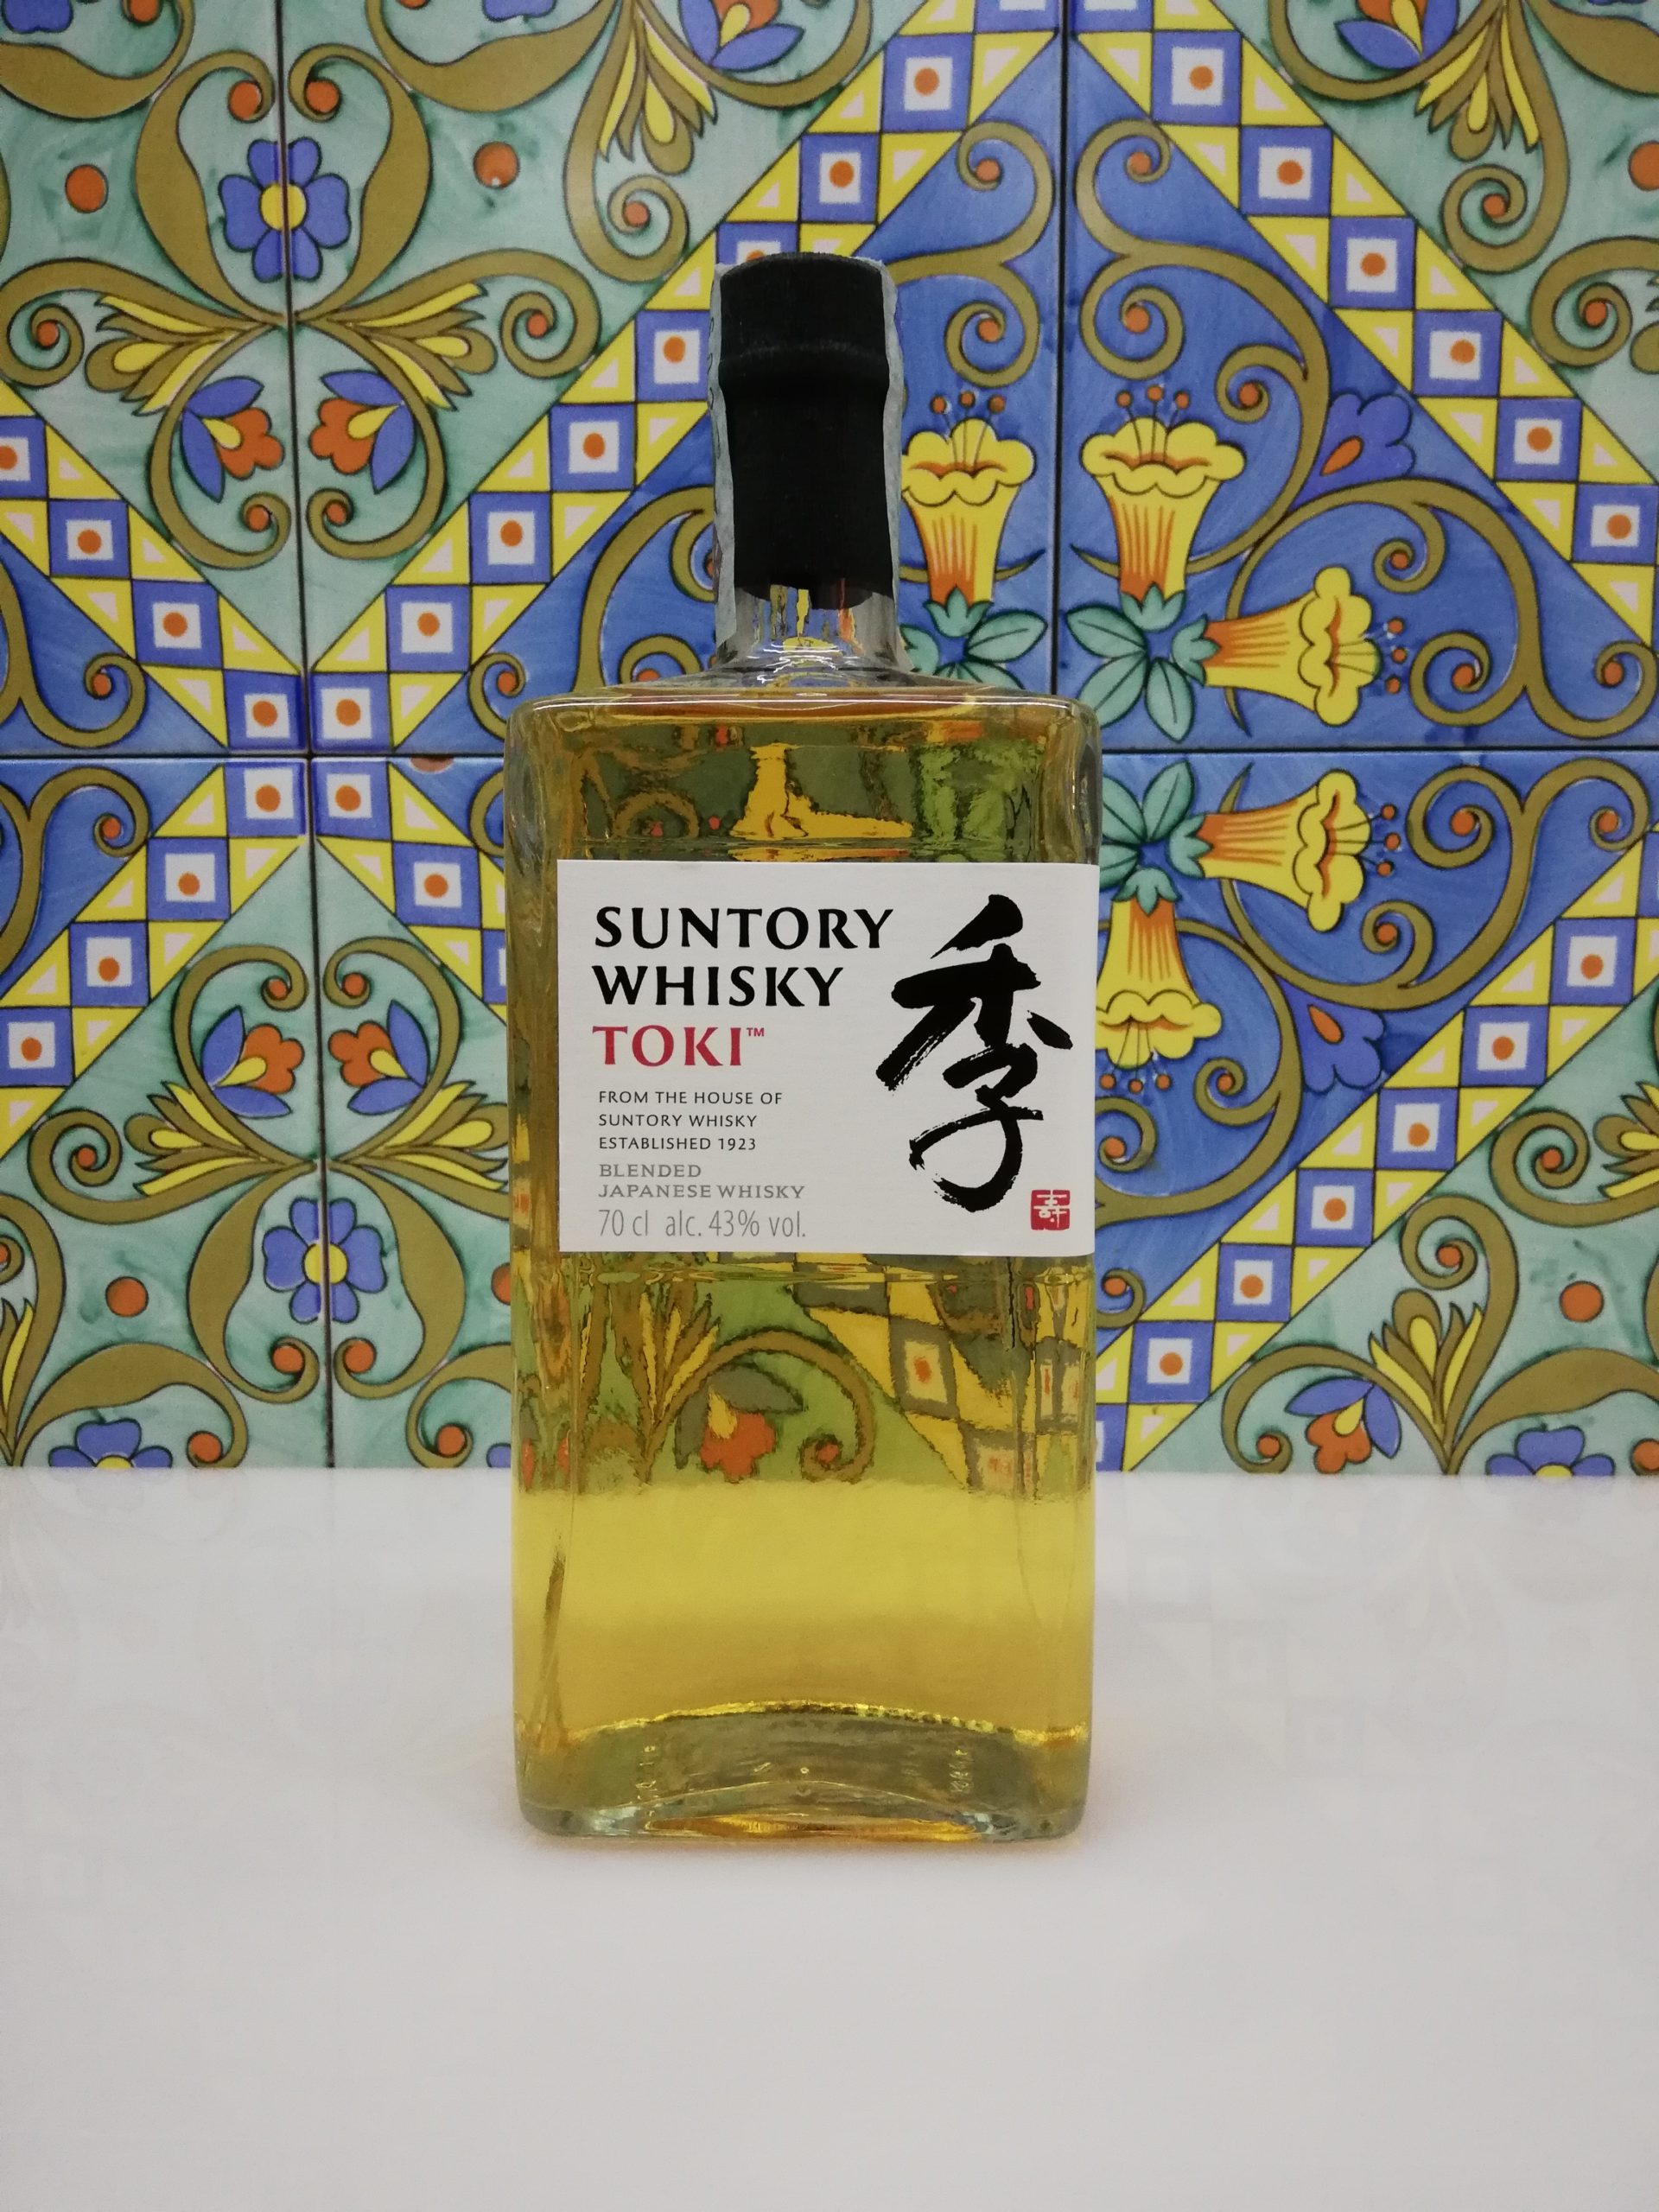 Maeba Blended vol Single 43% Suntory Whisky Japanese cl Toki Cask - 70